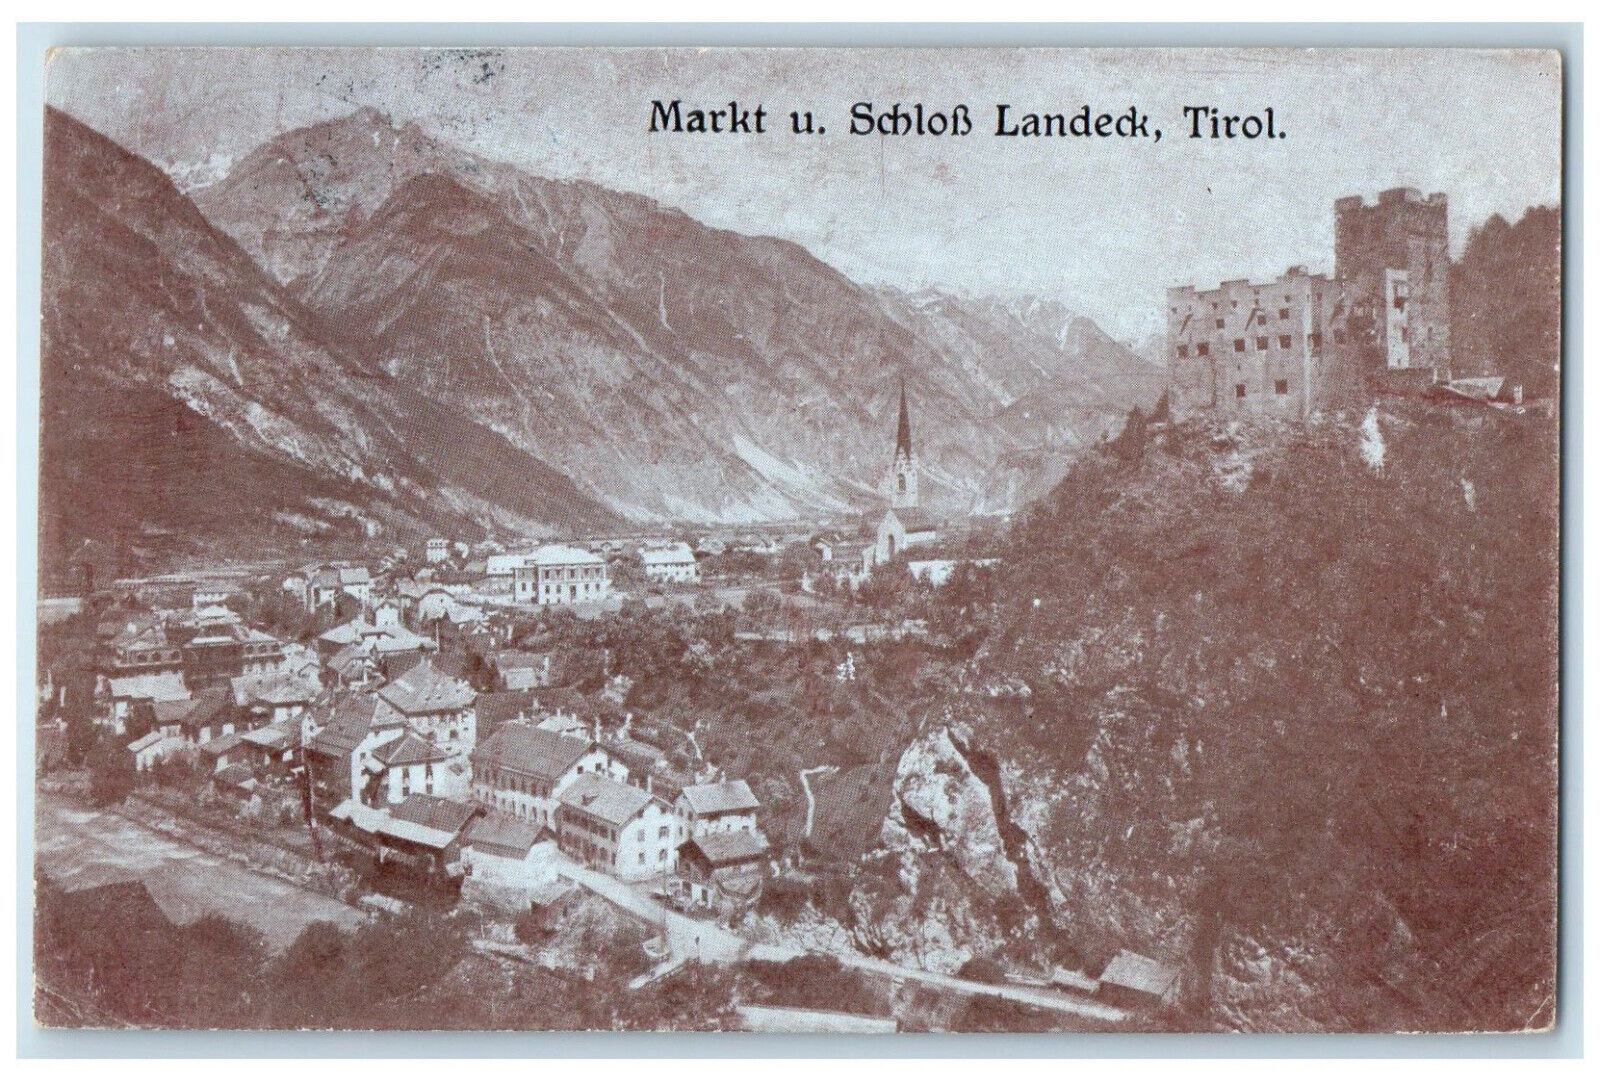 c1910 Market and Landeck Castle Tirol Austria Posted Antique Postcard